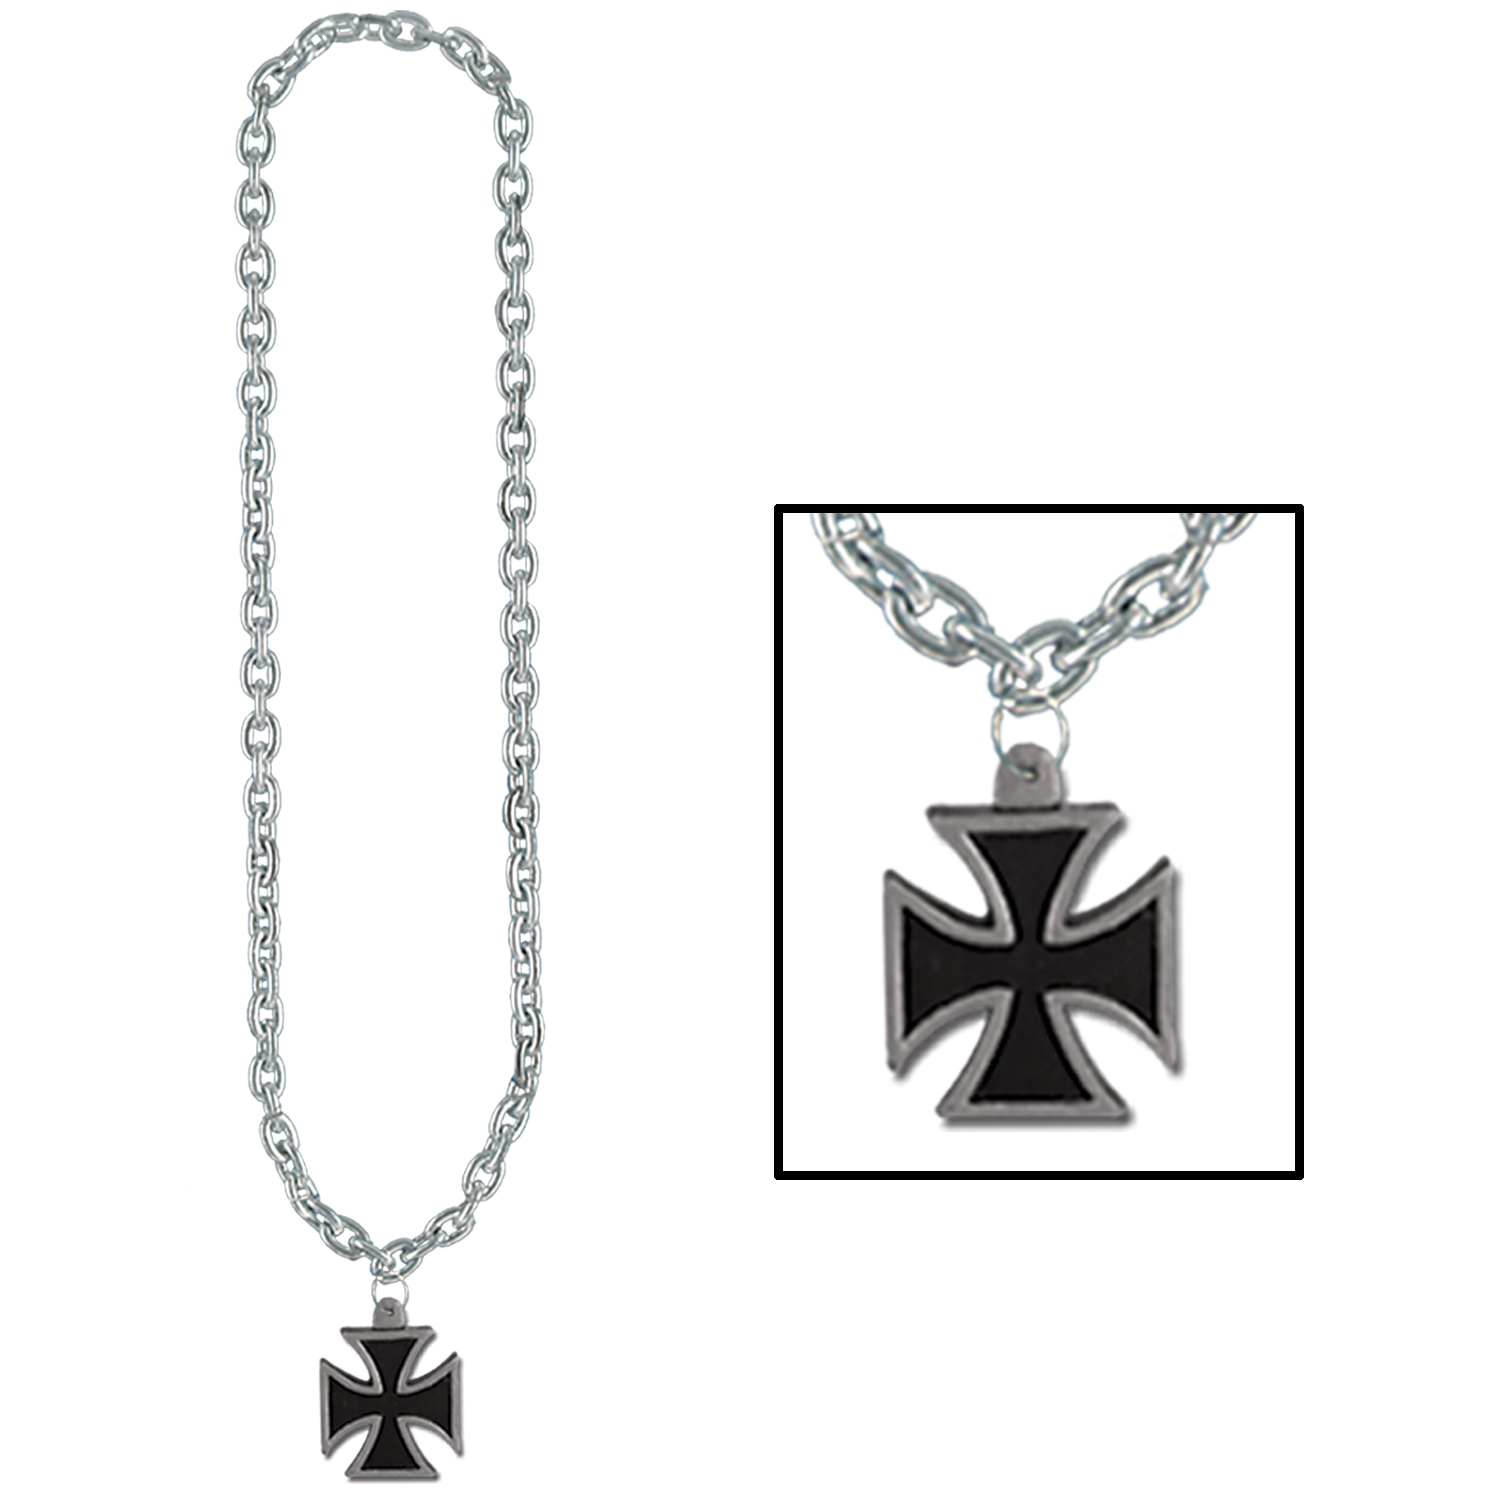 Chain BEADS w/Iron Cross Medal